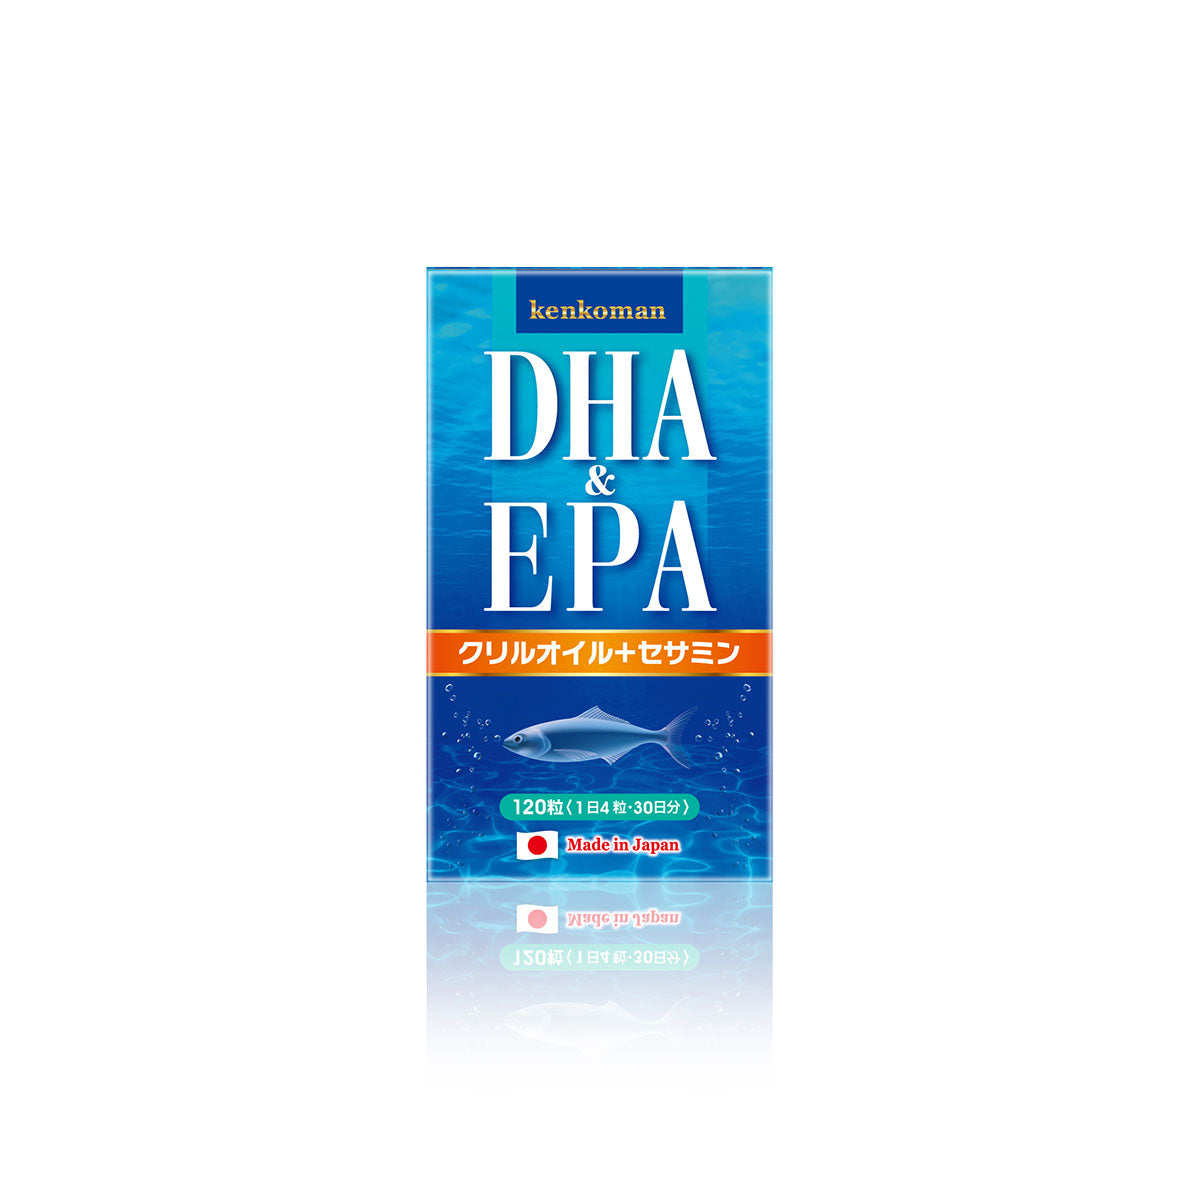 DHA et EPA